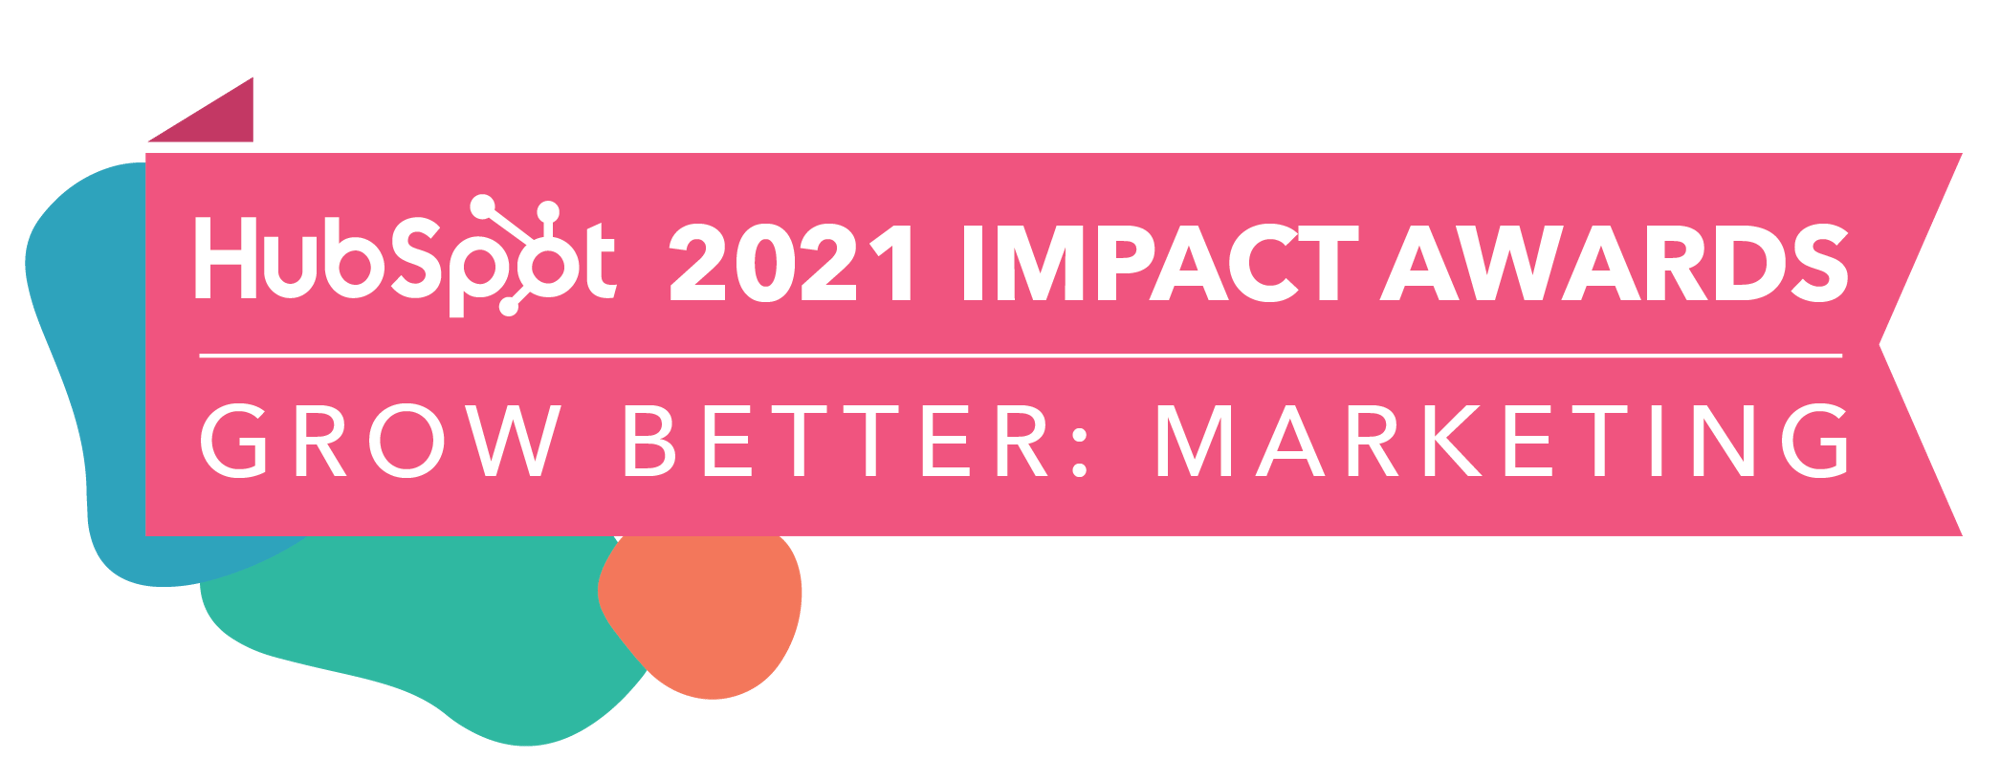 2021 impact award - grow better: marketing